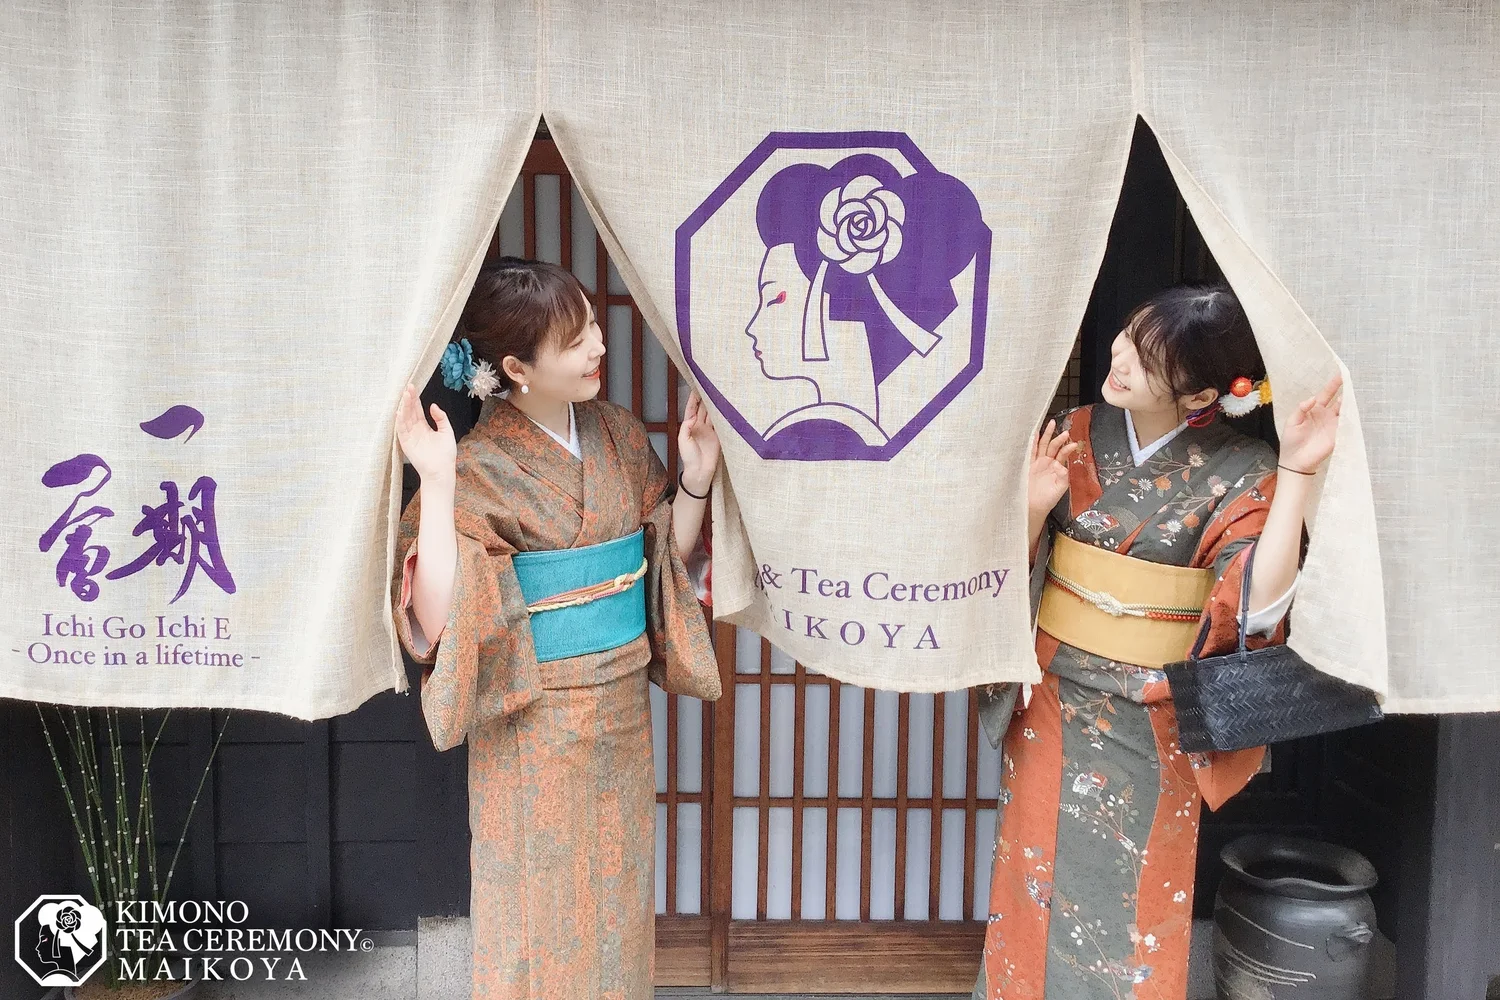 Kyoto MAIKOYA Full-fledged tea ceremony experience at Kyomachiya Reservation (with kimono rental)